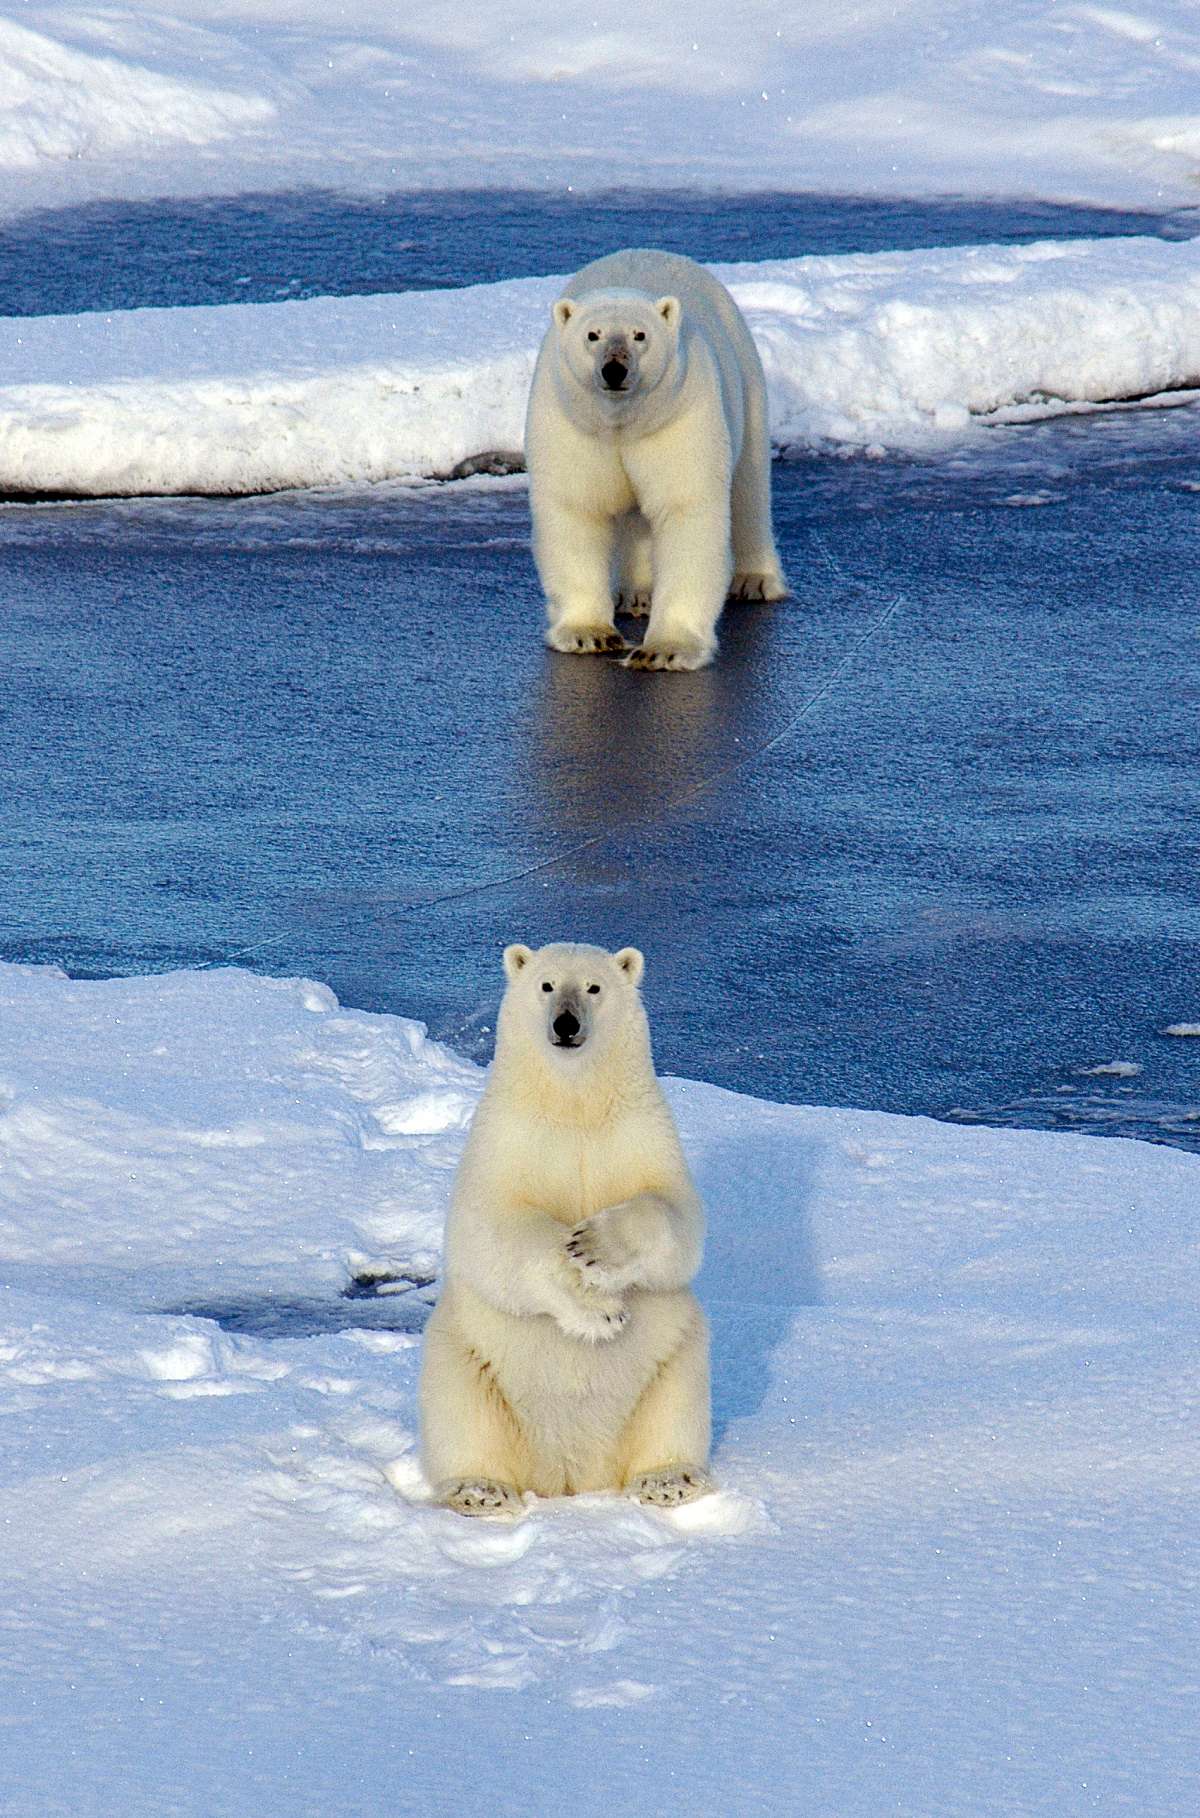 A polar bear mother on the ice with her cub.